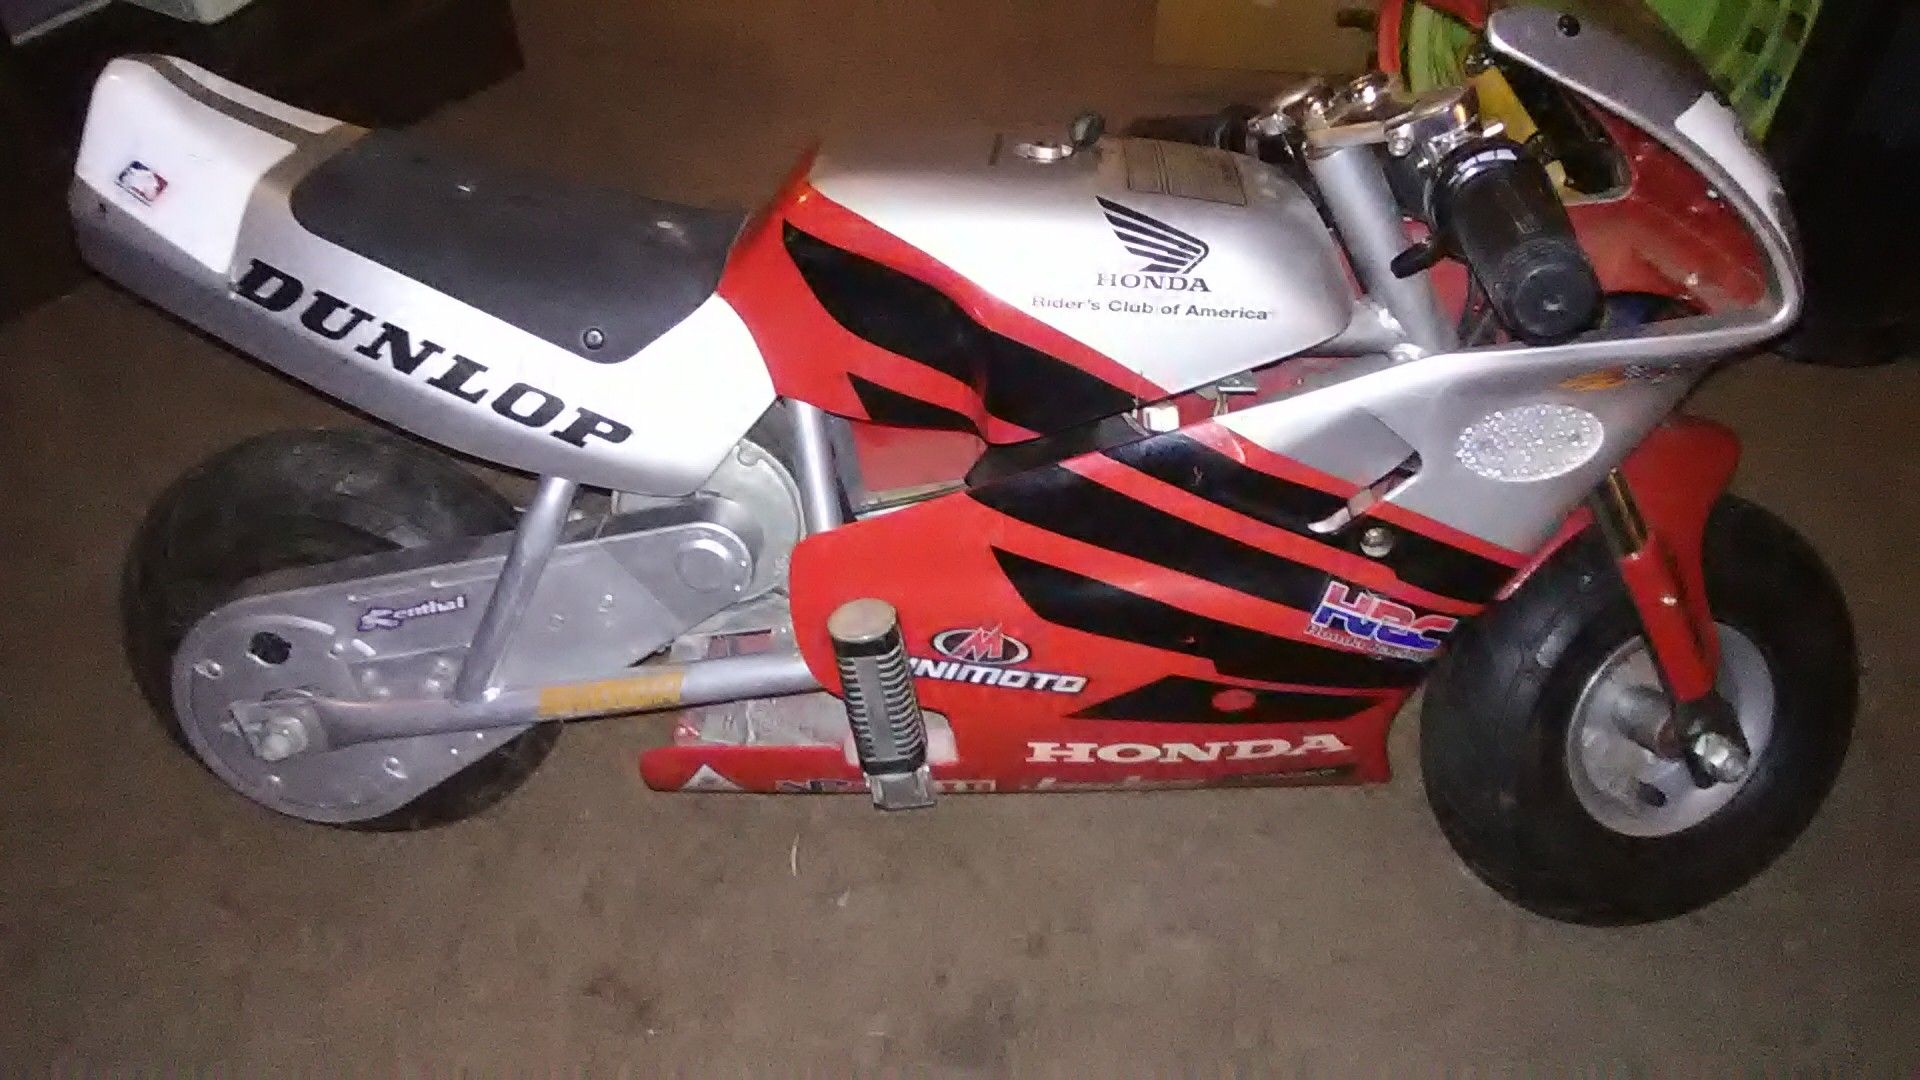 Honda minimoto Crotch Rocket